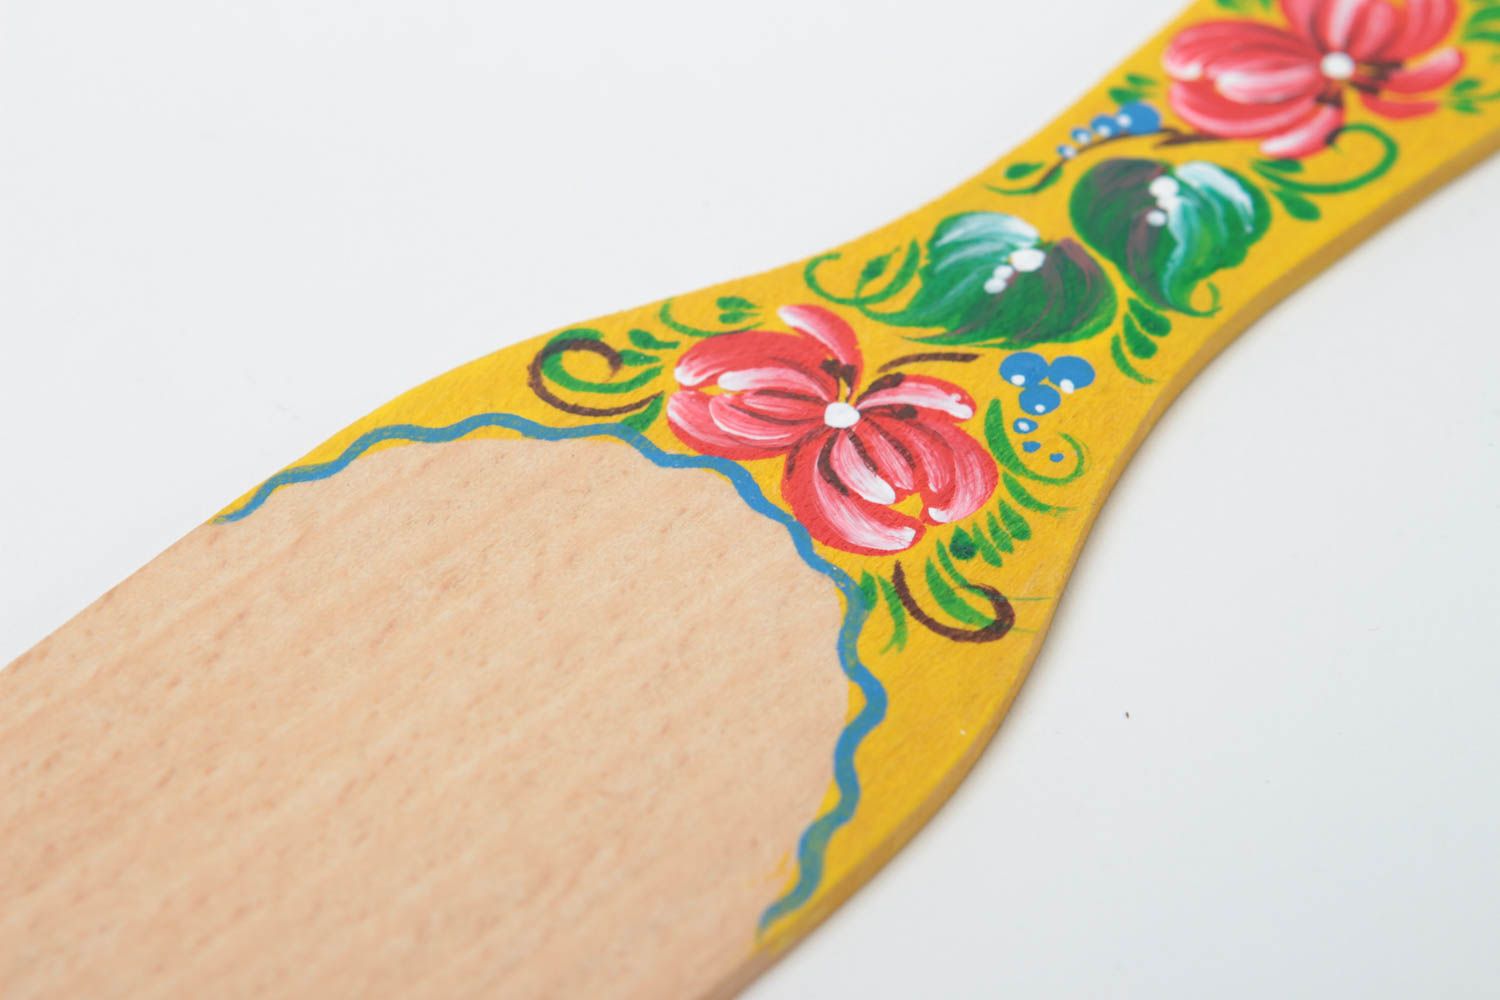 Beautiful homemade painted wooden spatula decorative kitchen utensils gift ideas photo 3